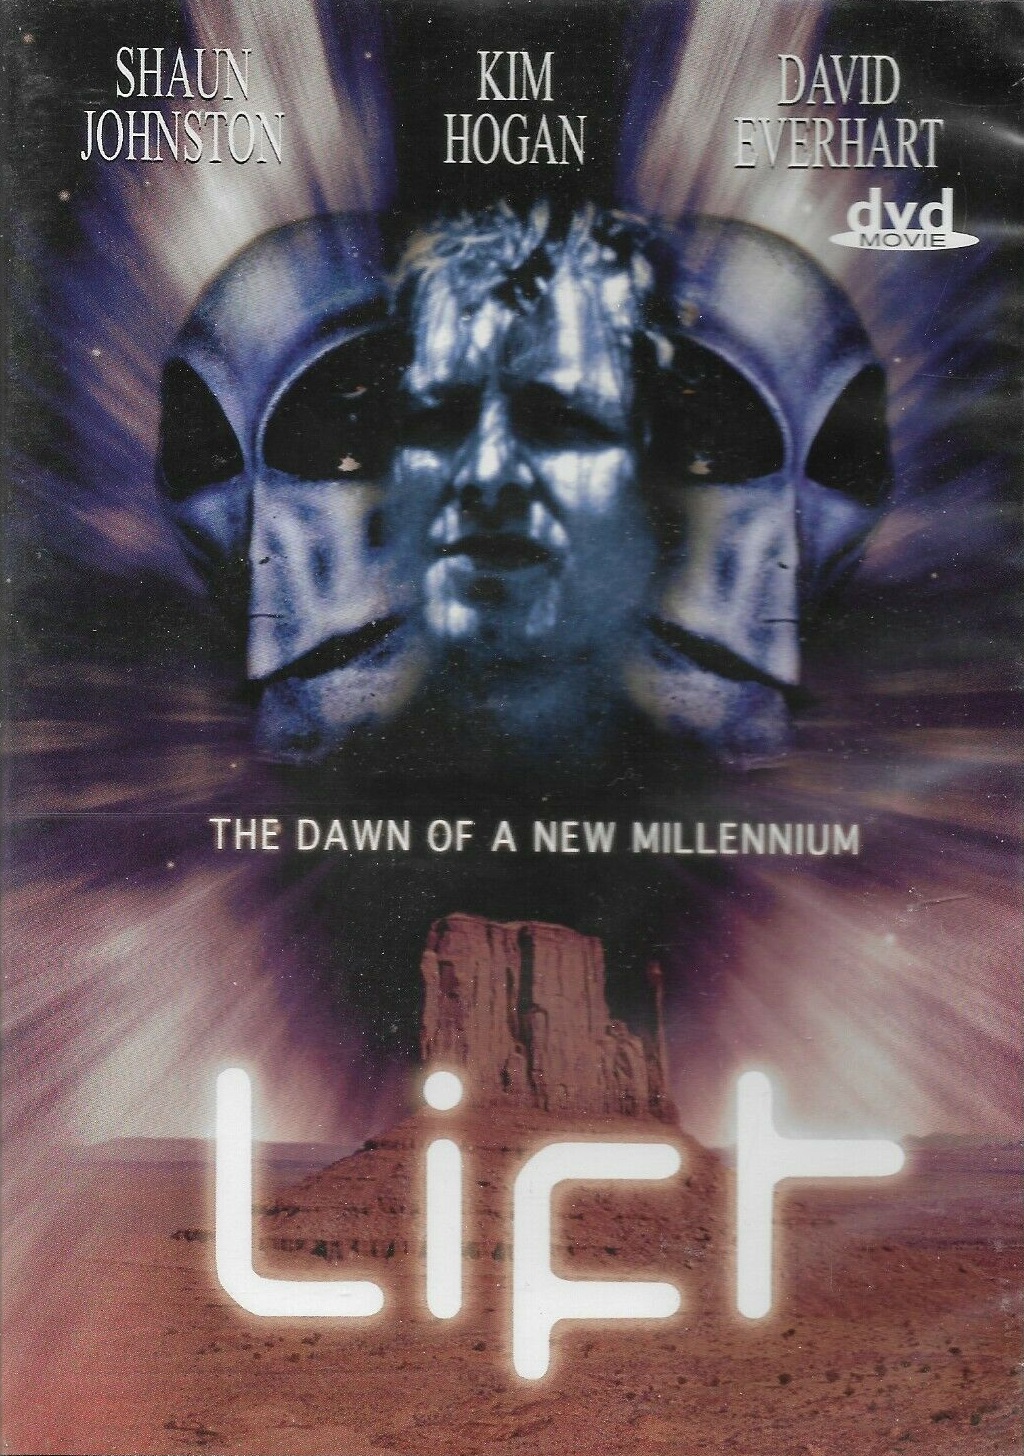 Lift (1997) Screenshot 2